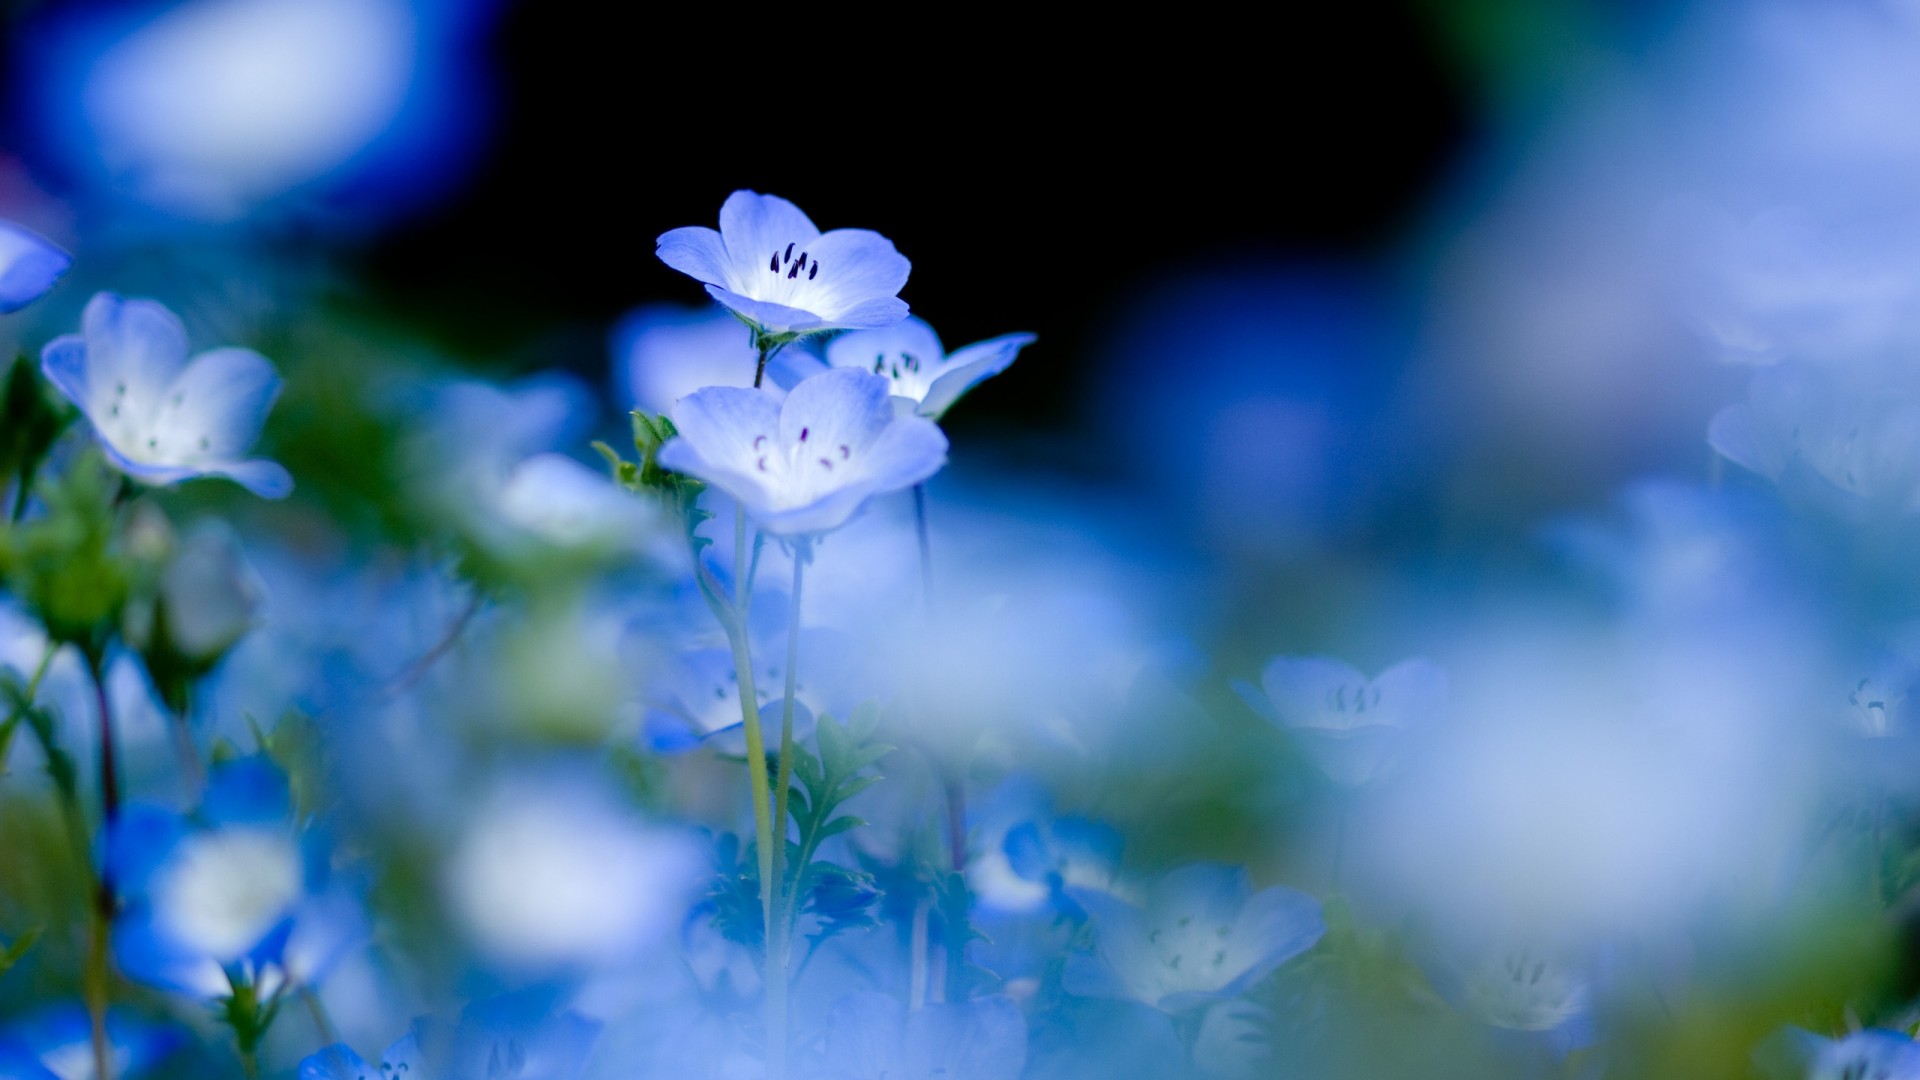 Beautiful Blue Flowers Photo Wallpaper Download Beautiful Blue Flowers Photo Wallpaper